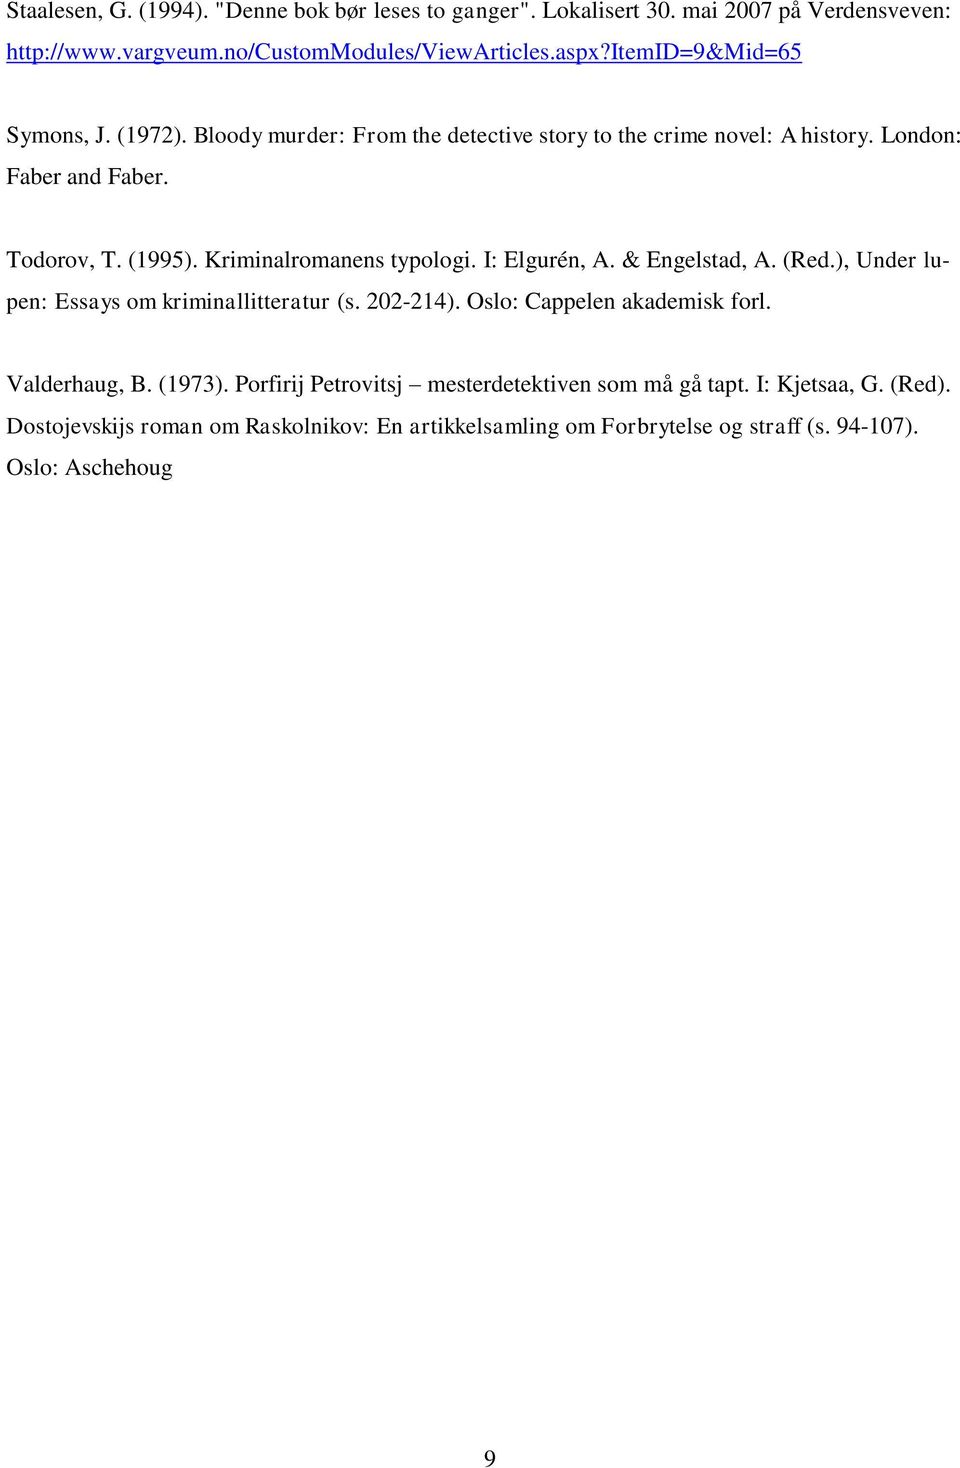 Kriminalromanens typologi. I: Elgurén, A. & Engelstad, A. (Red.), Under lupen: Essays om kriminallitteratur (s. 202-214). Oslo: Cappelen akademisk forl.